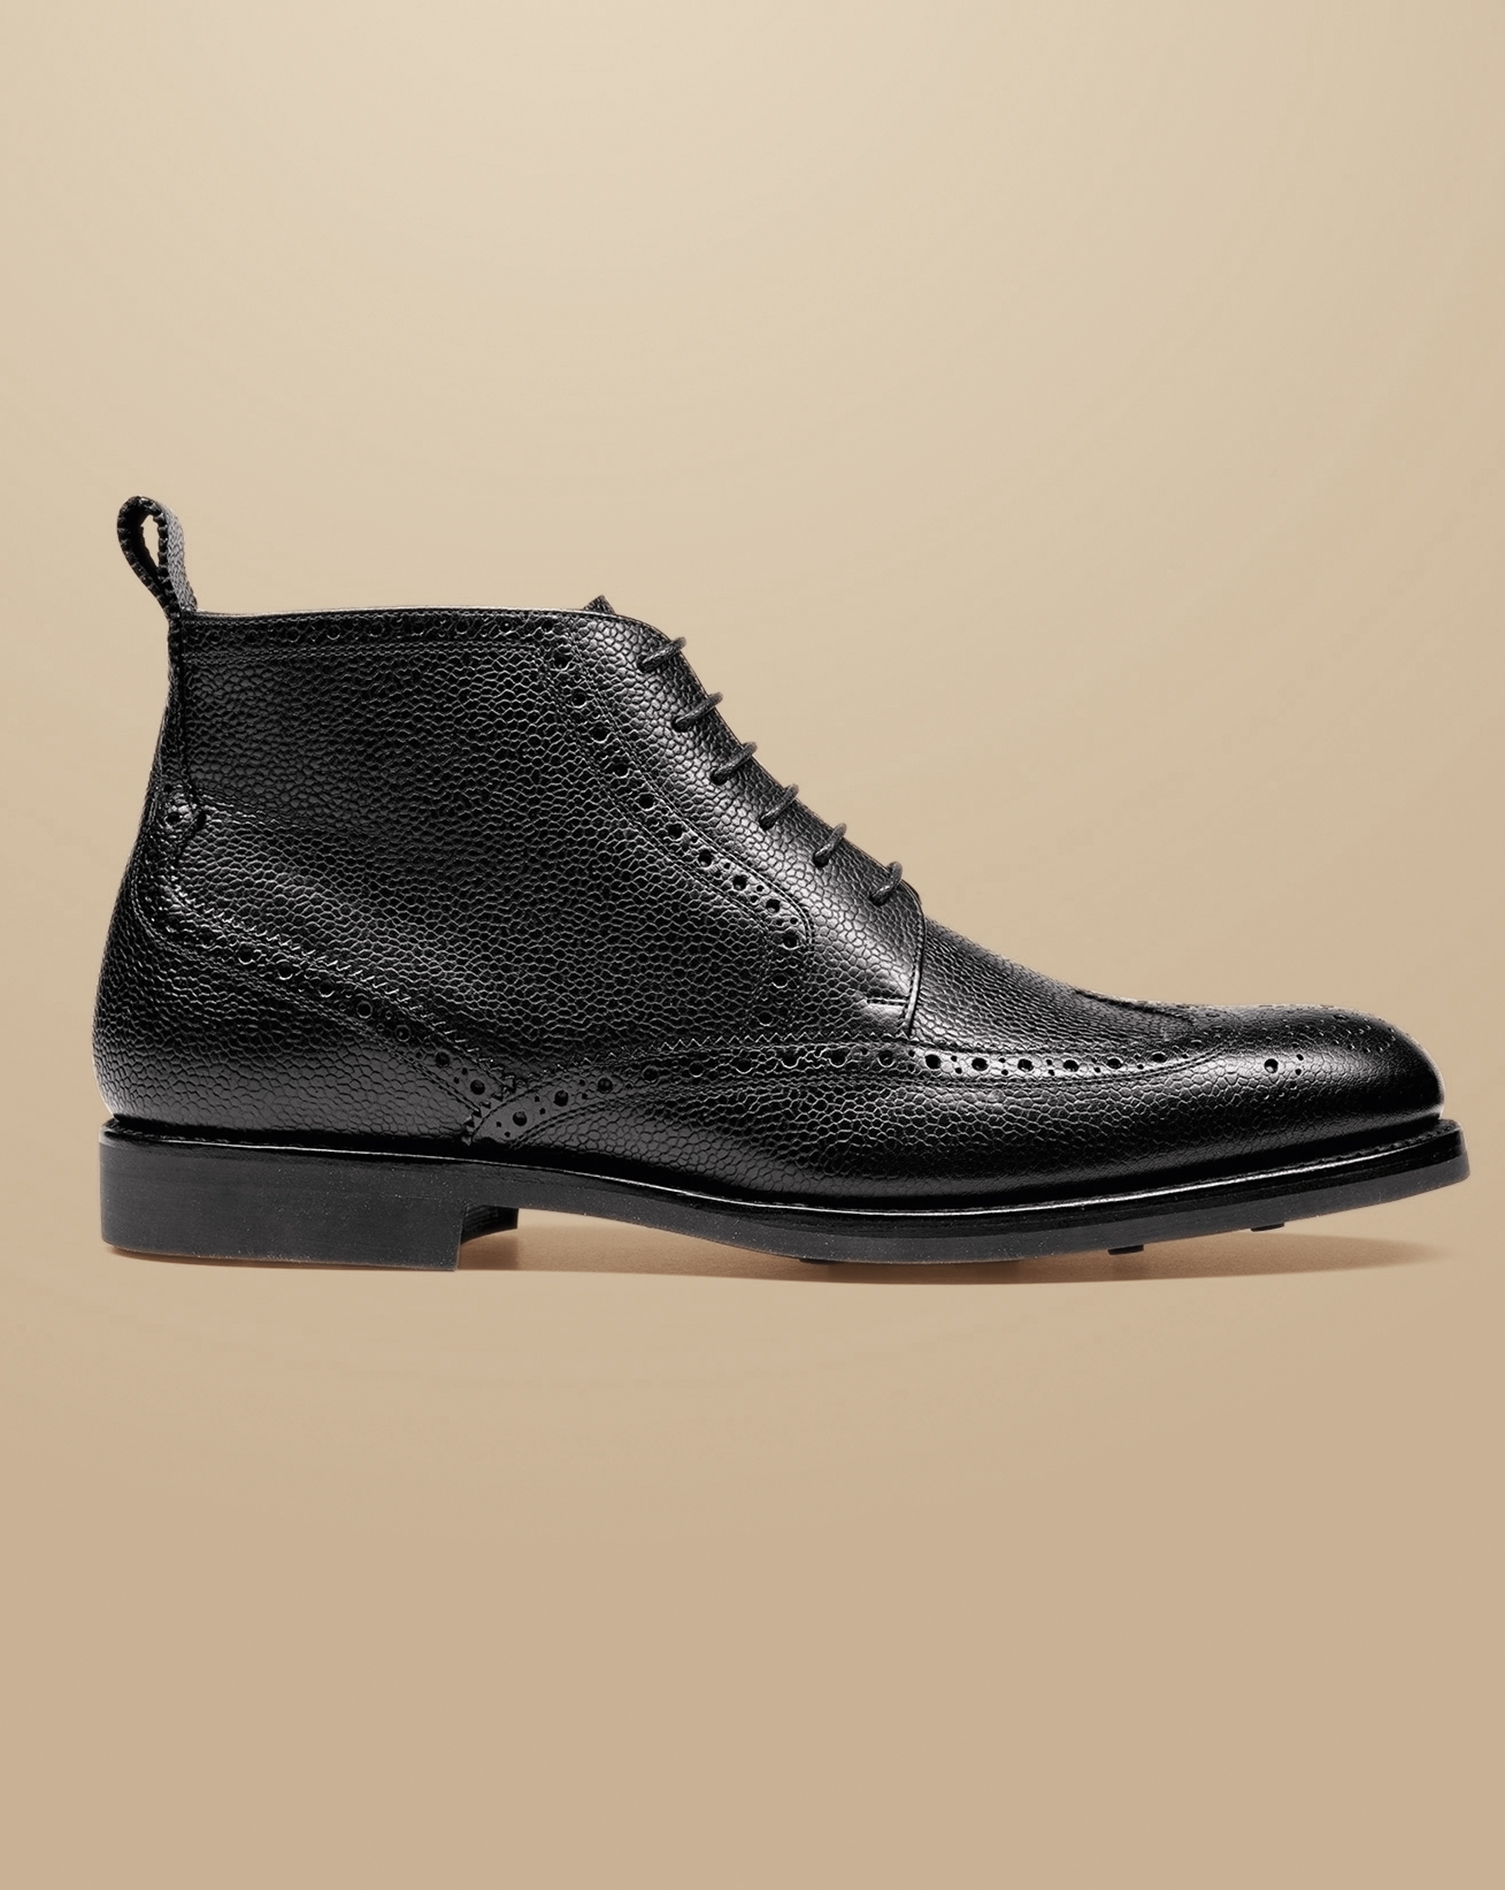 Men's Charles Tyrwhitt Brogue Boots - Black Size 11 Leather
